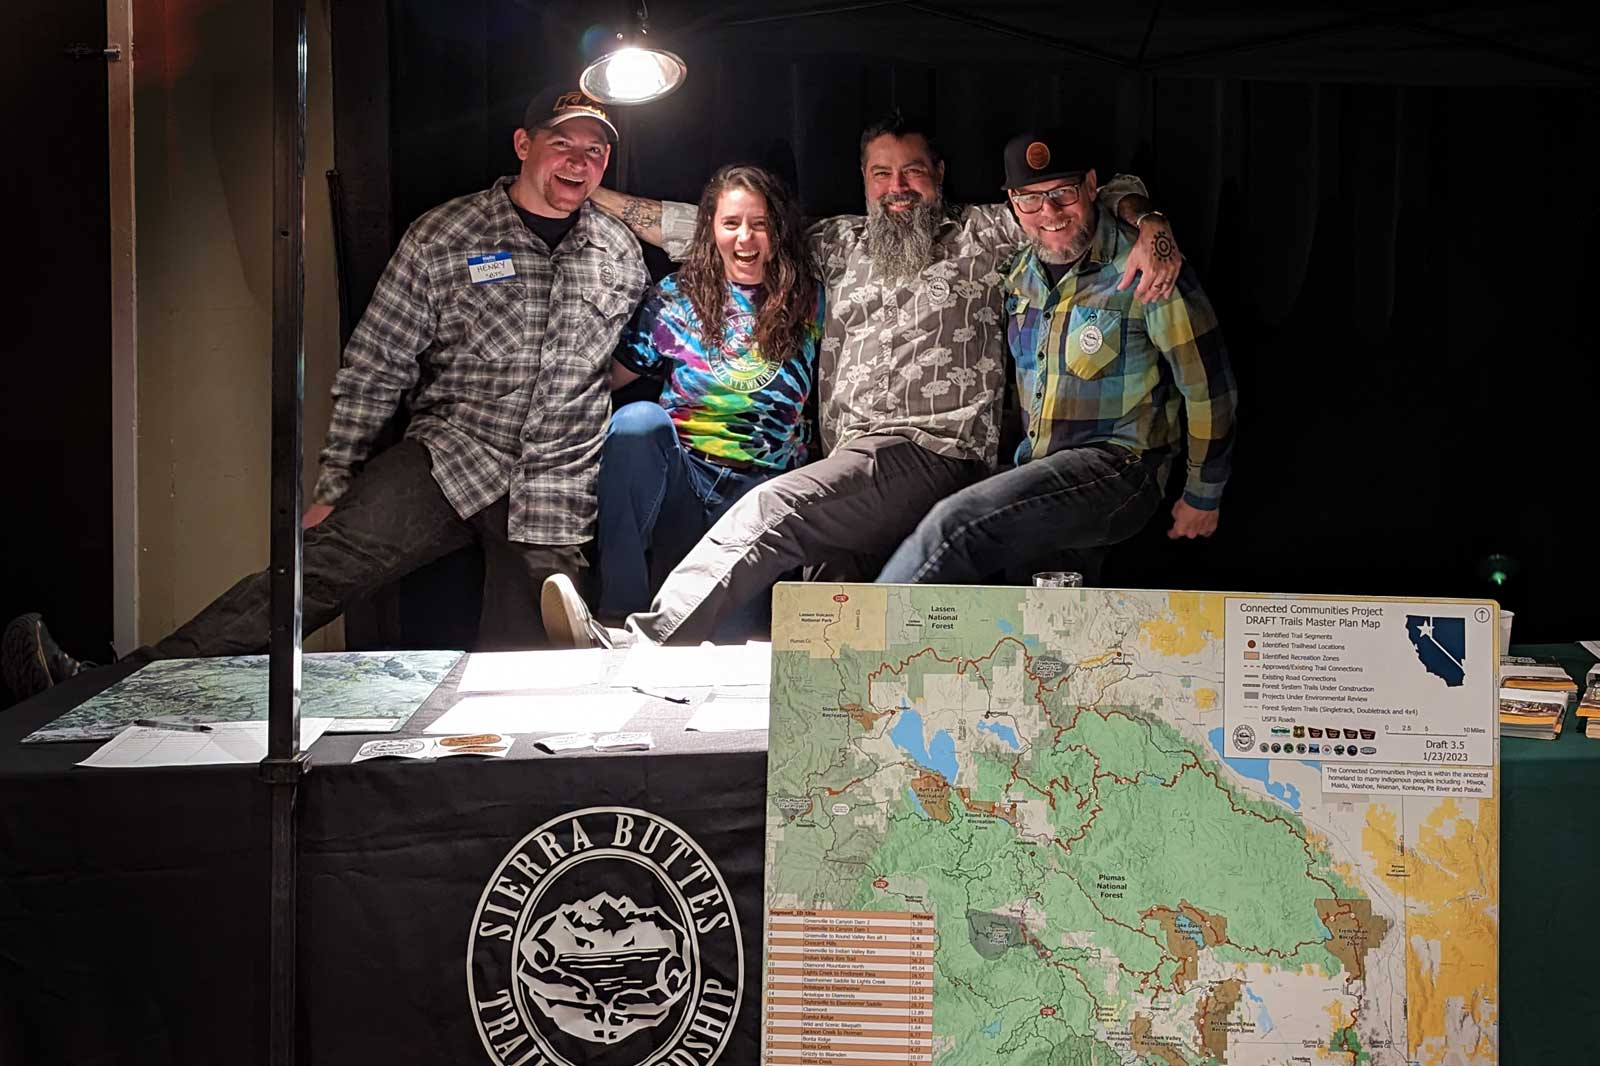 Sierra Buttes Trail Stewardship Booth